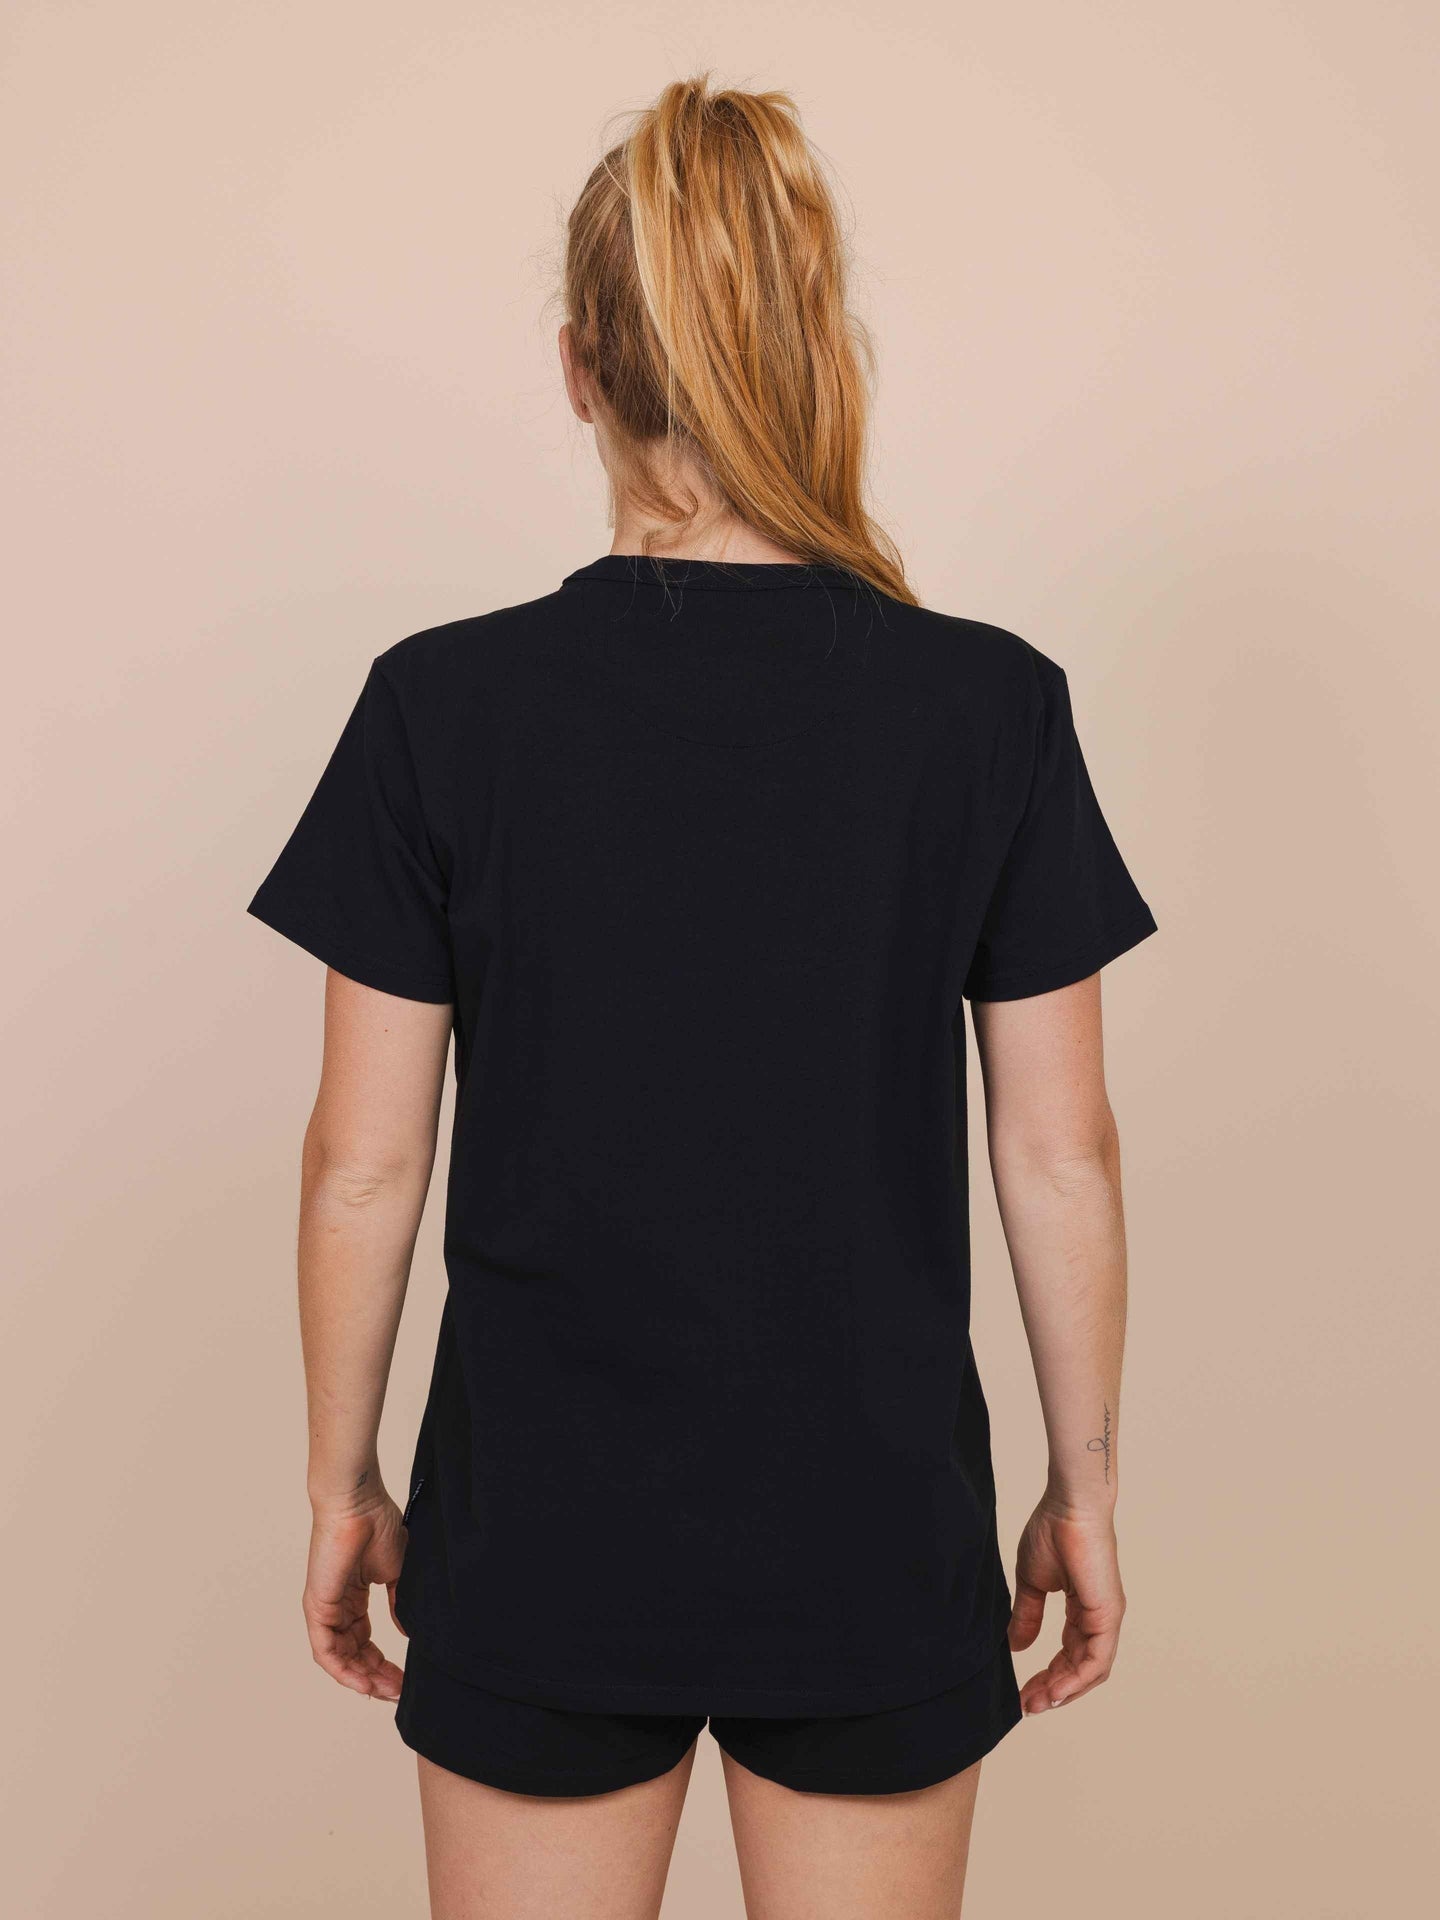 Black T-shirt Unisex - SNURK